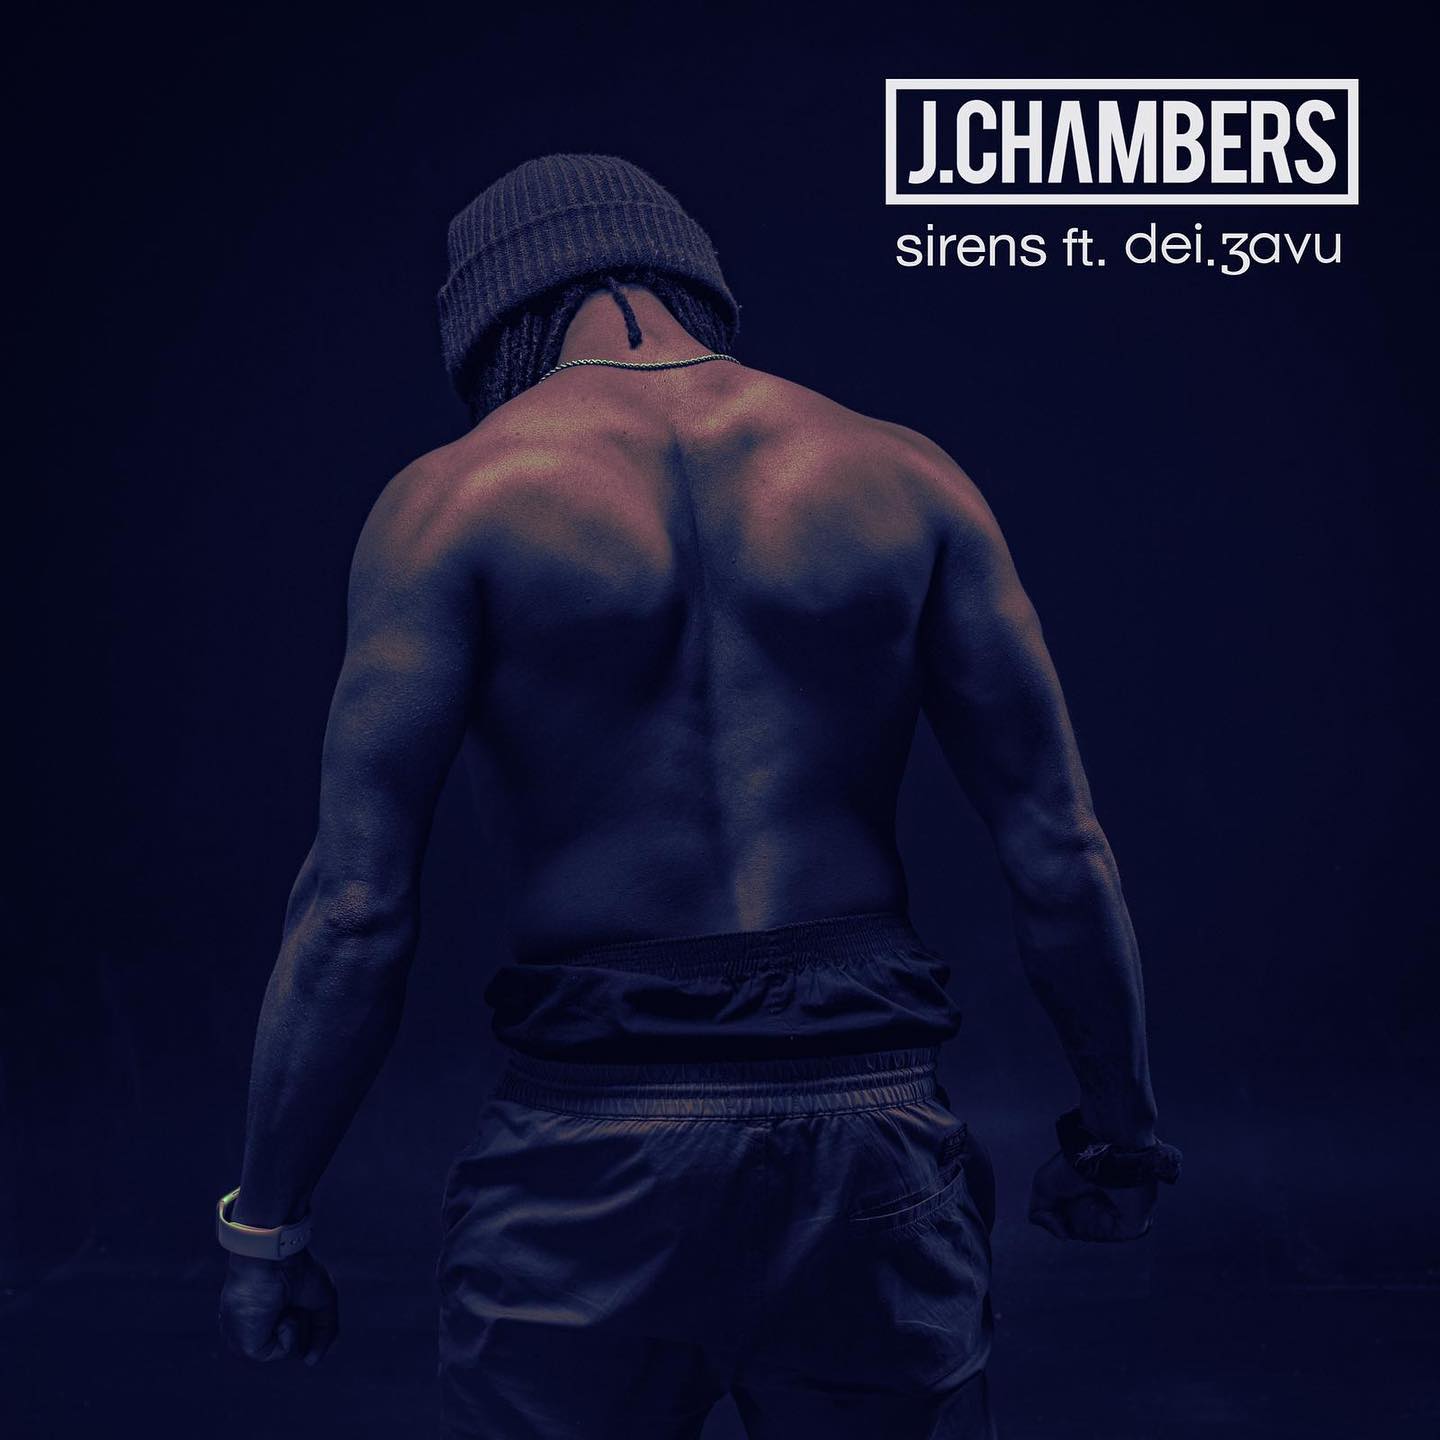 Hip-hop artist J.Chambers’ latest single has an important message, The Manc